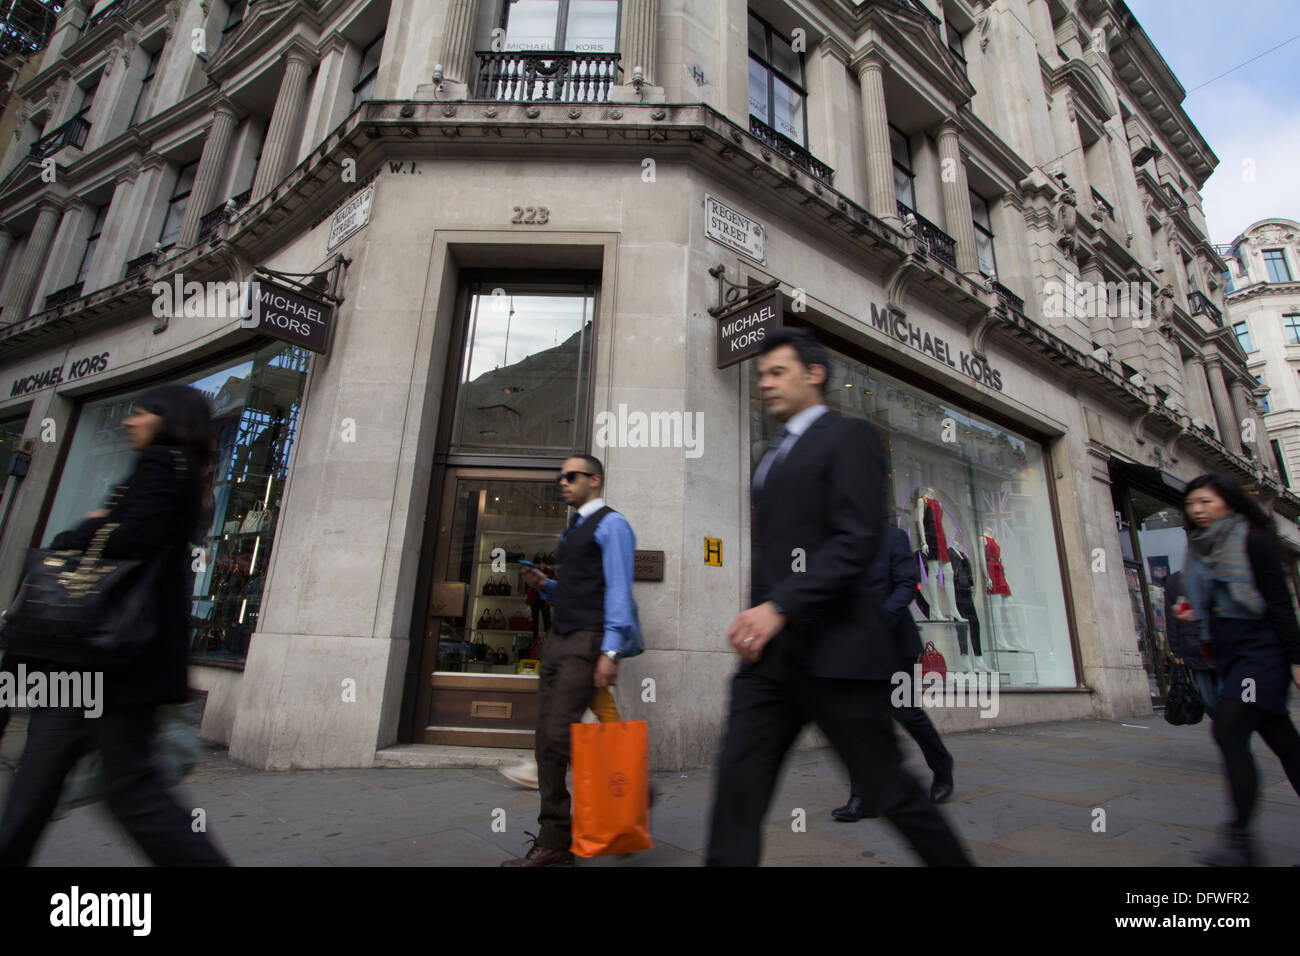 Michael Kors fashion shop Regent Street London Stock Photo - Alamy